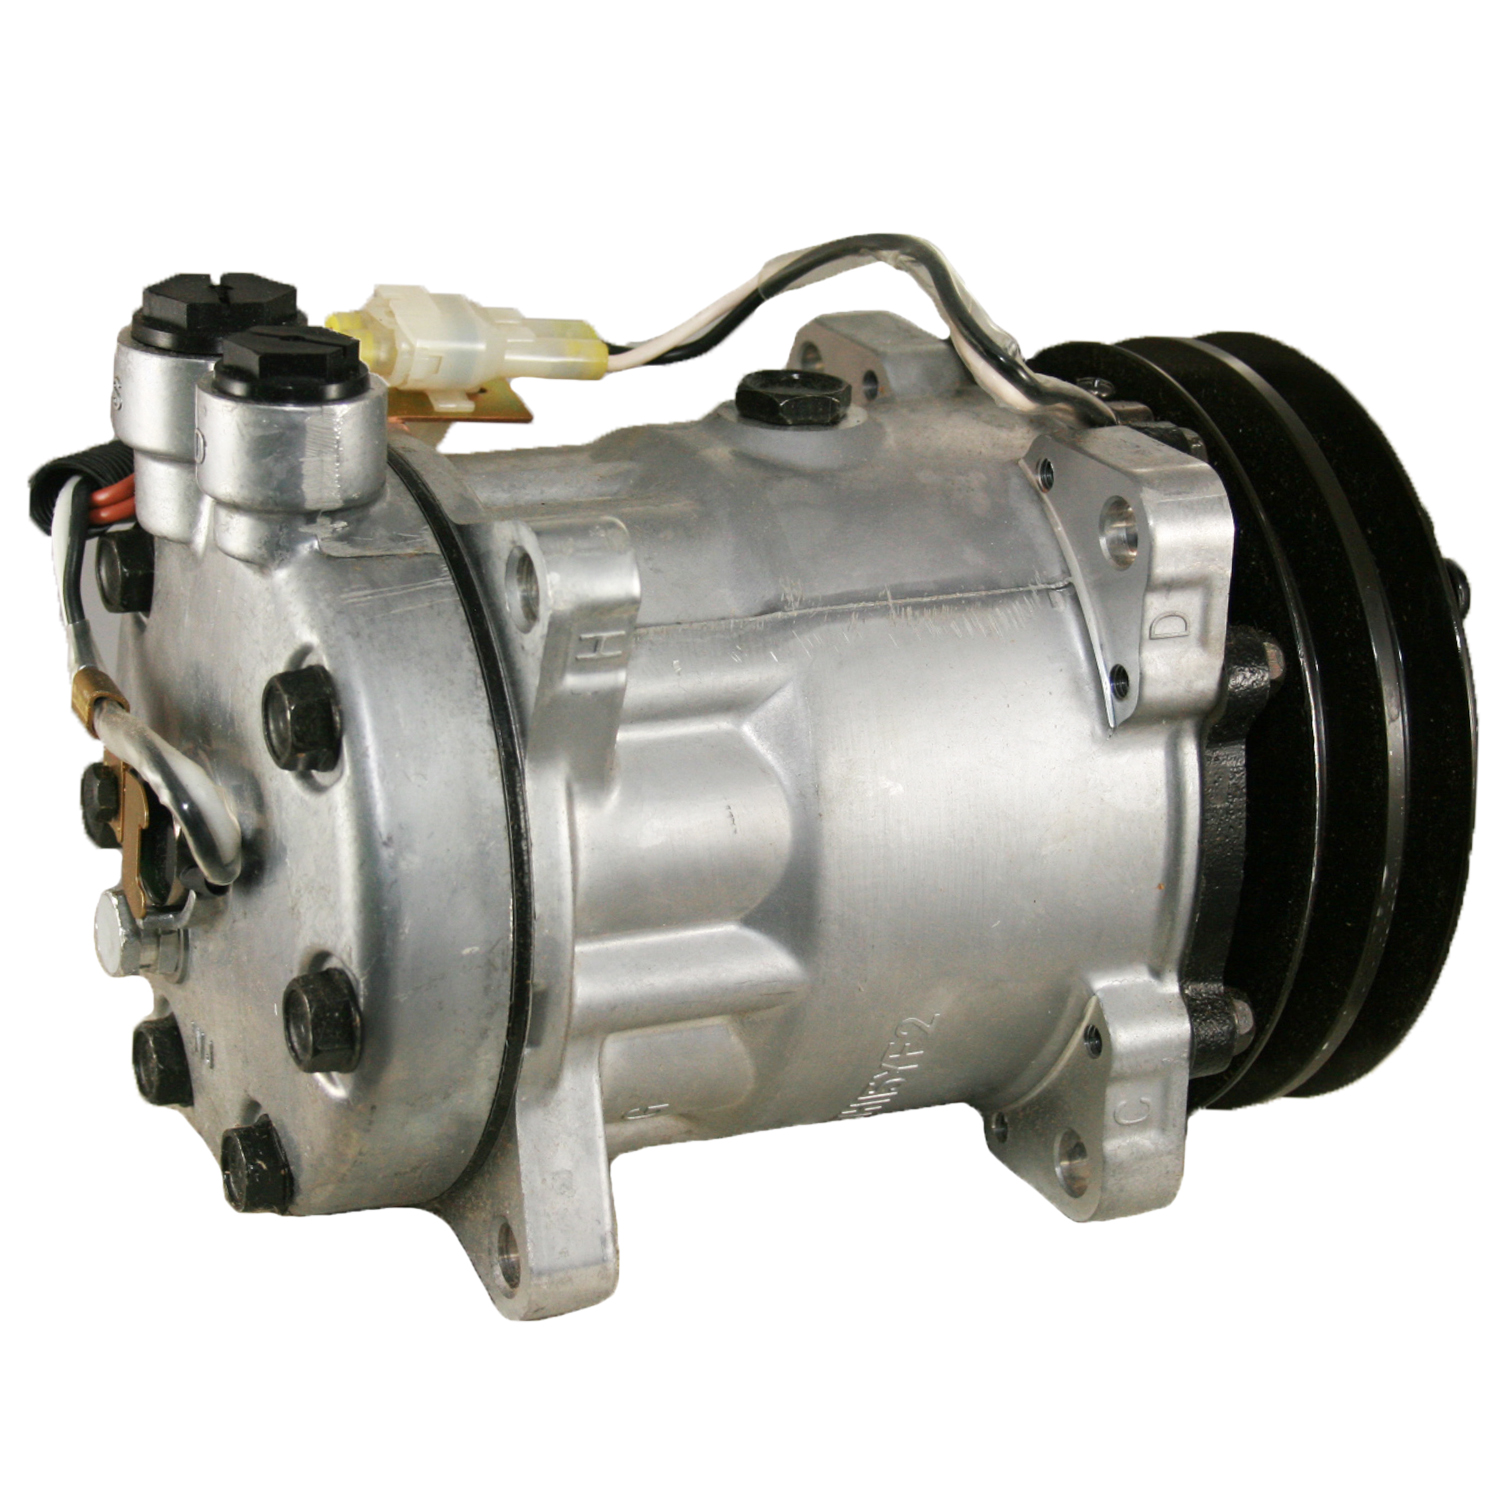 TCW Compressor 40555.201NEW New Product Image field_60b6a13a6e67c